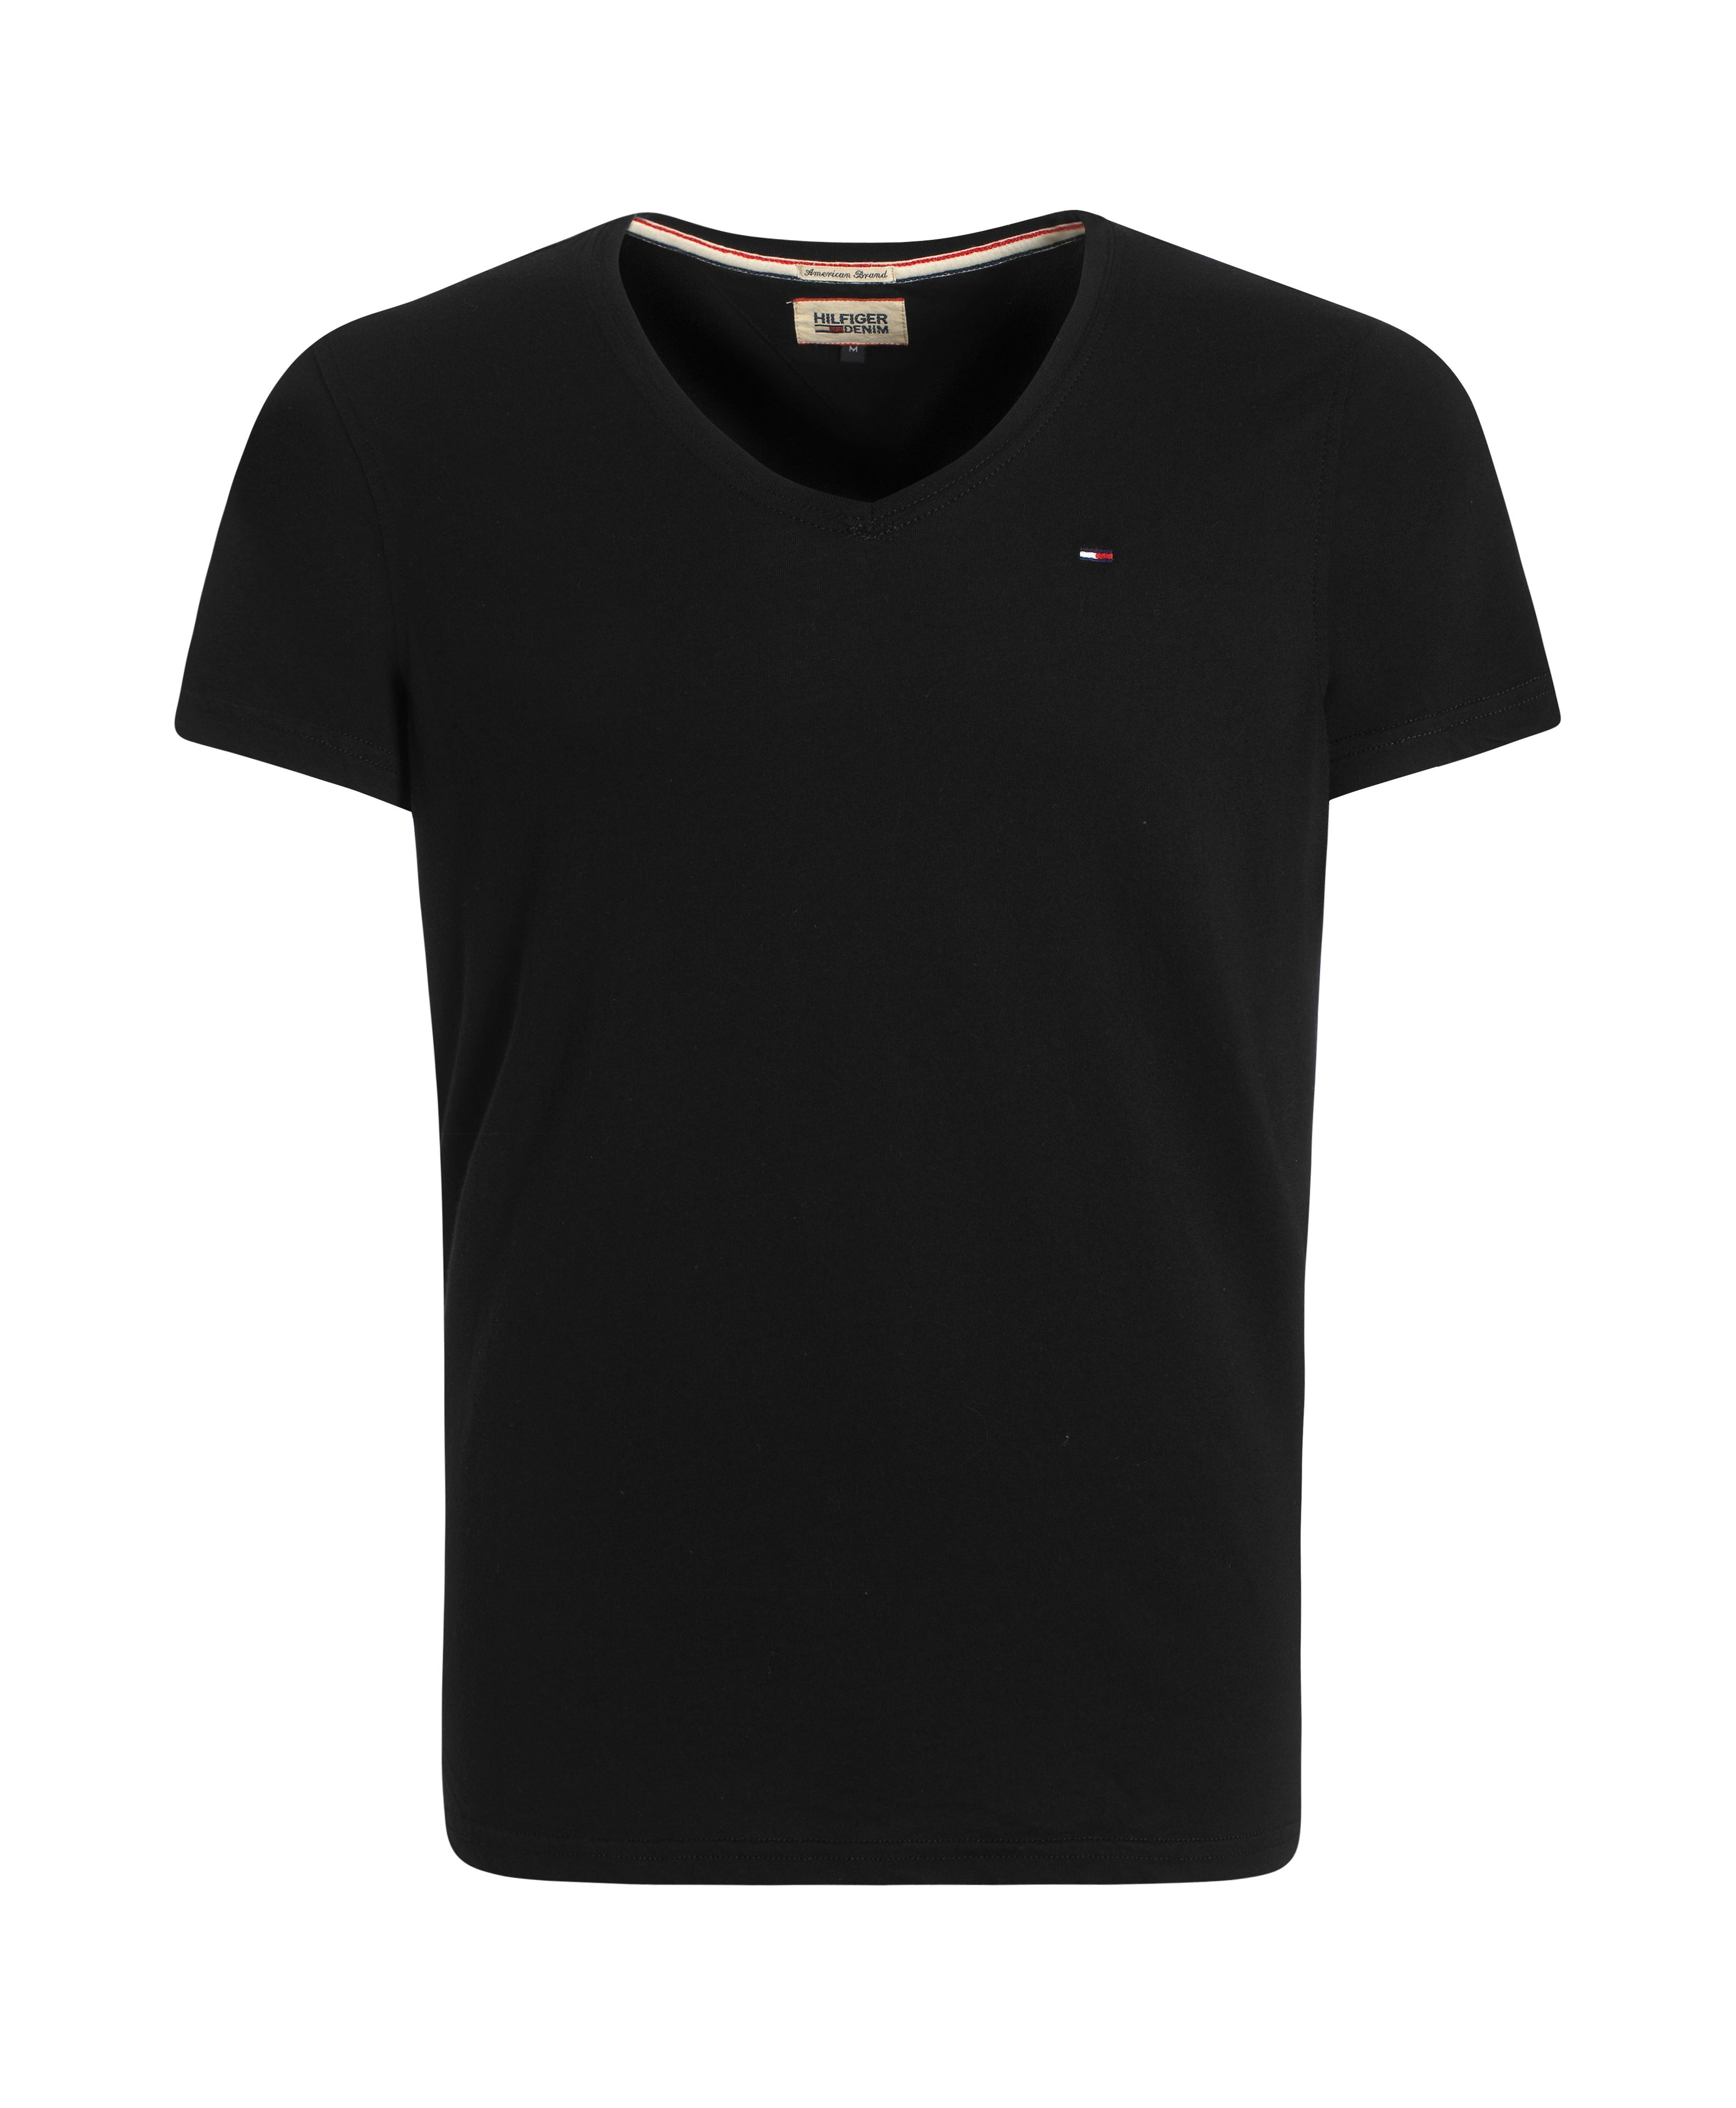 Tommy hilfiger Panson T-shirt in Black for Men | Lyst